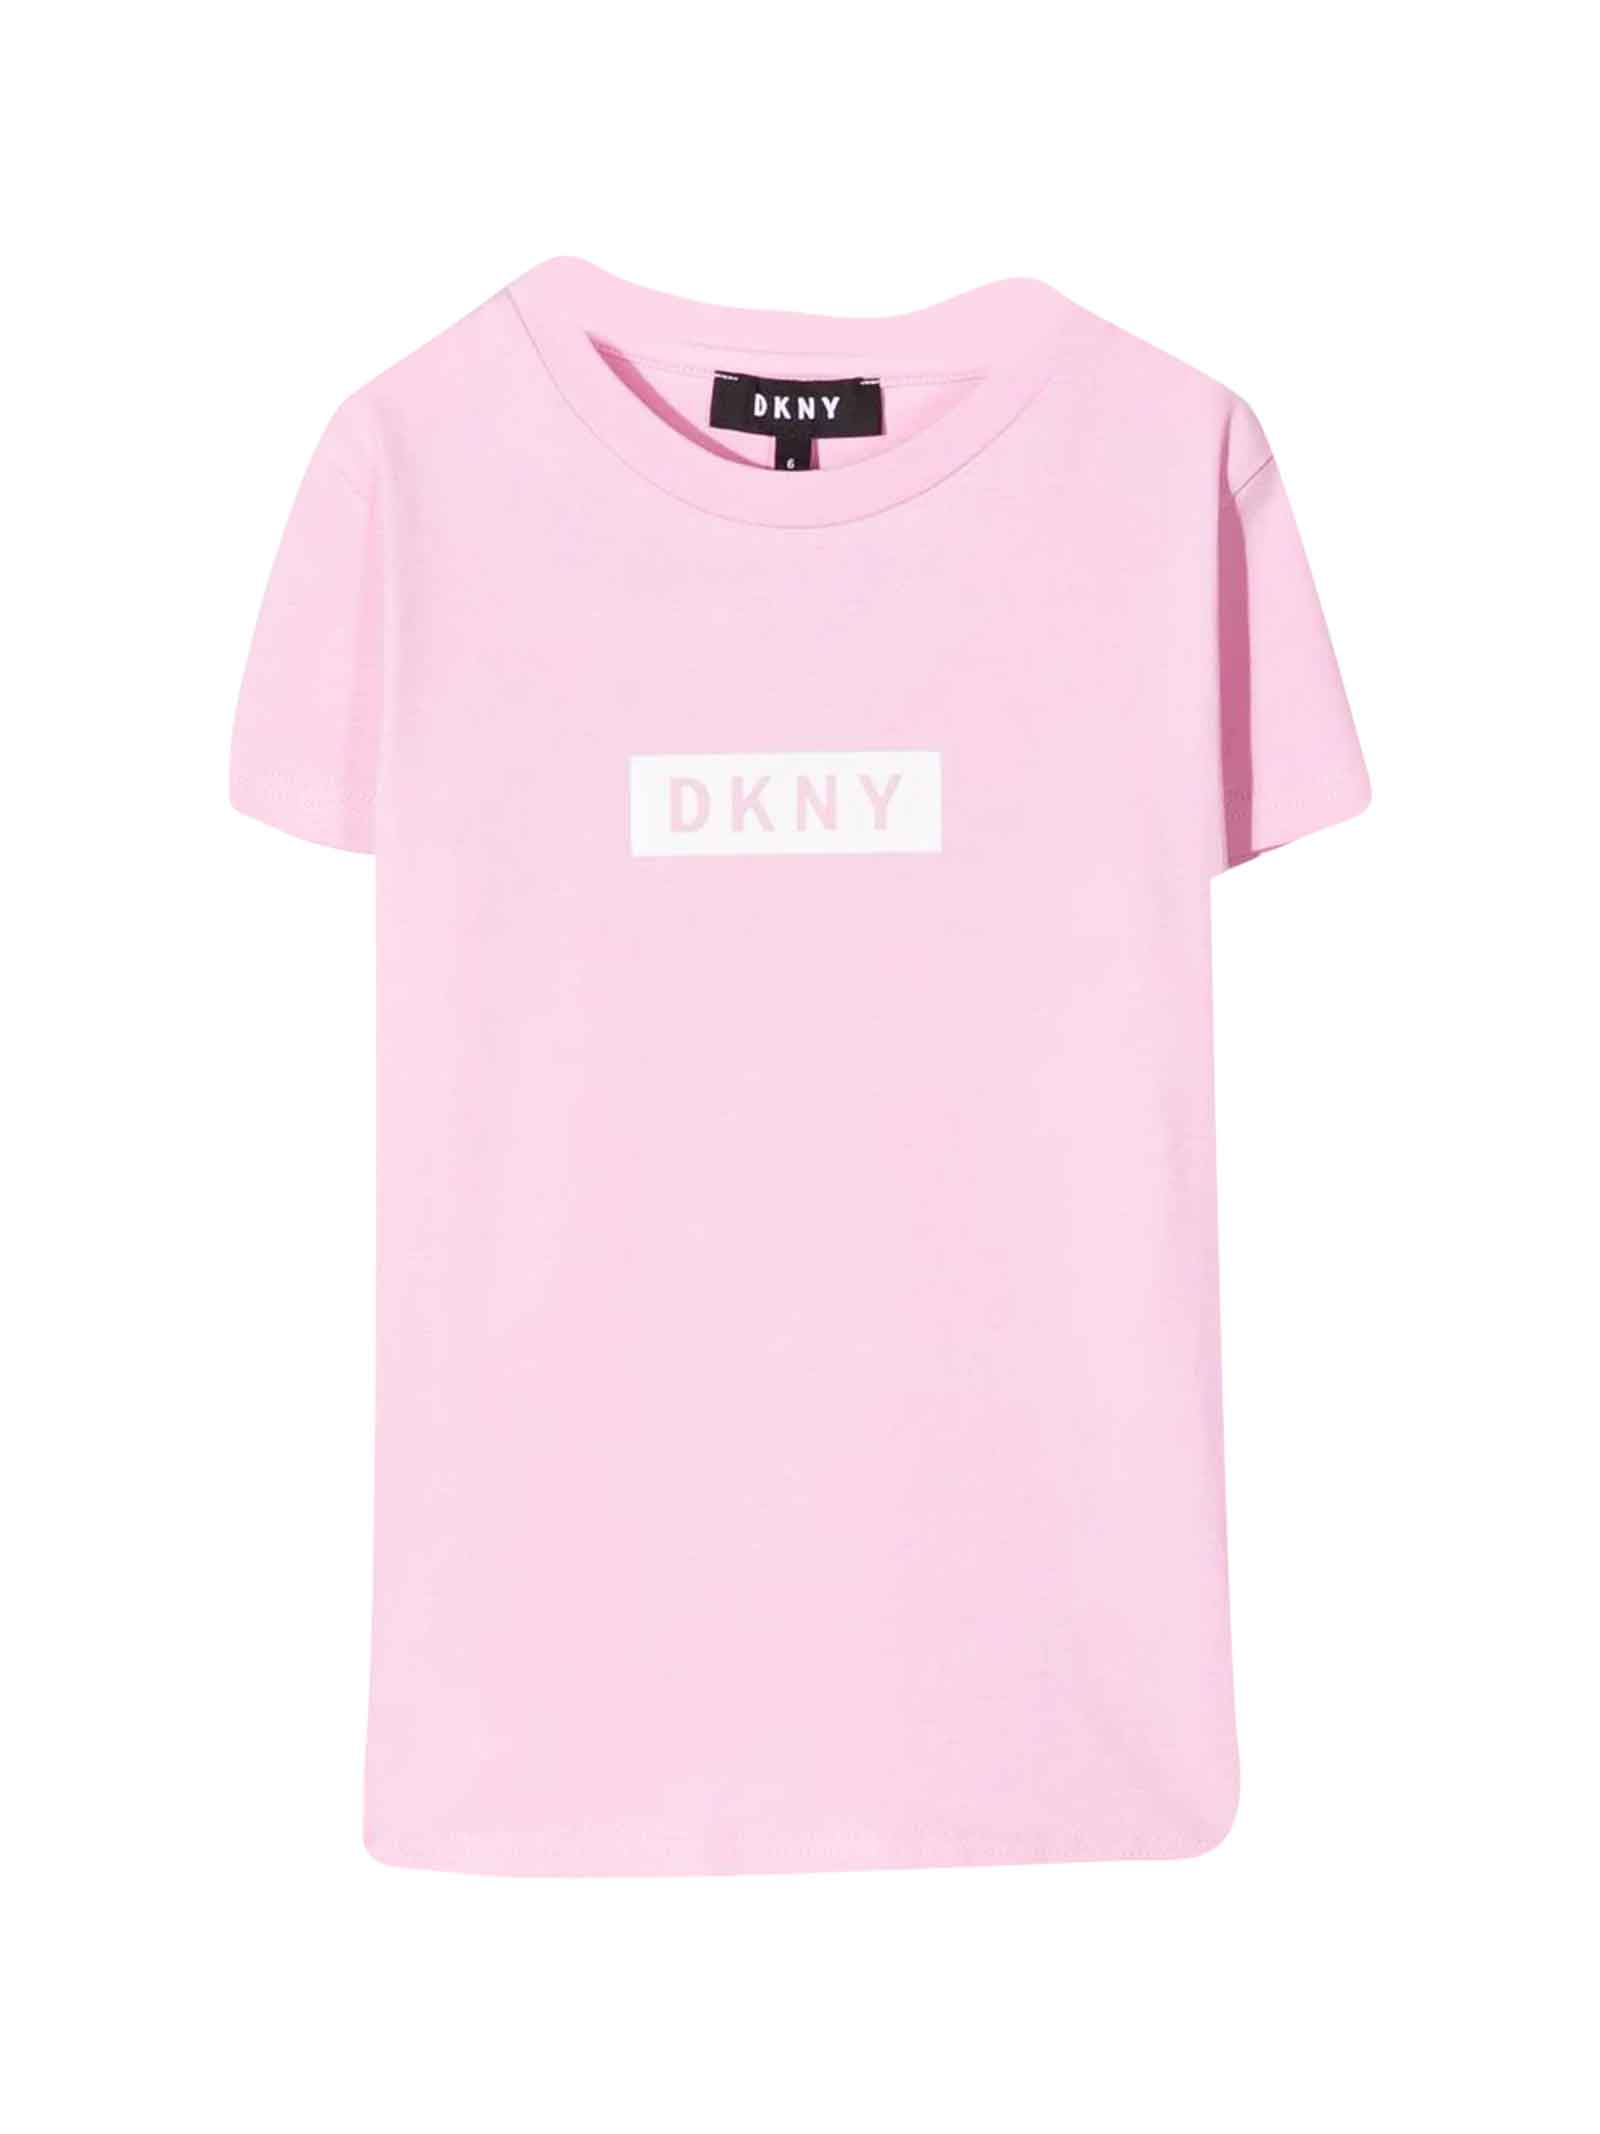 DKNY Pink T-shirt Unisex